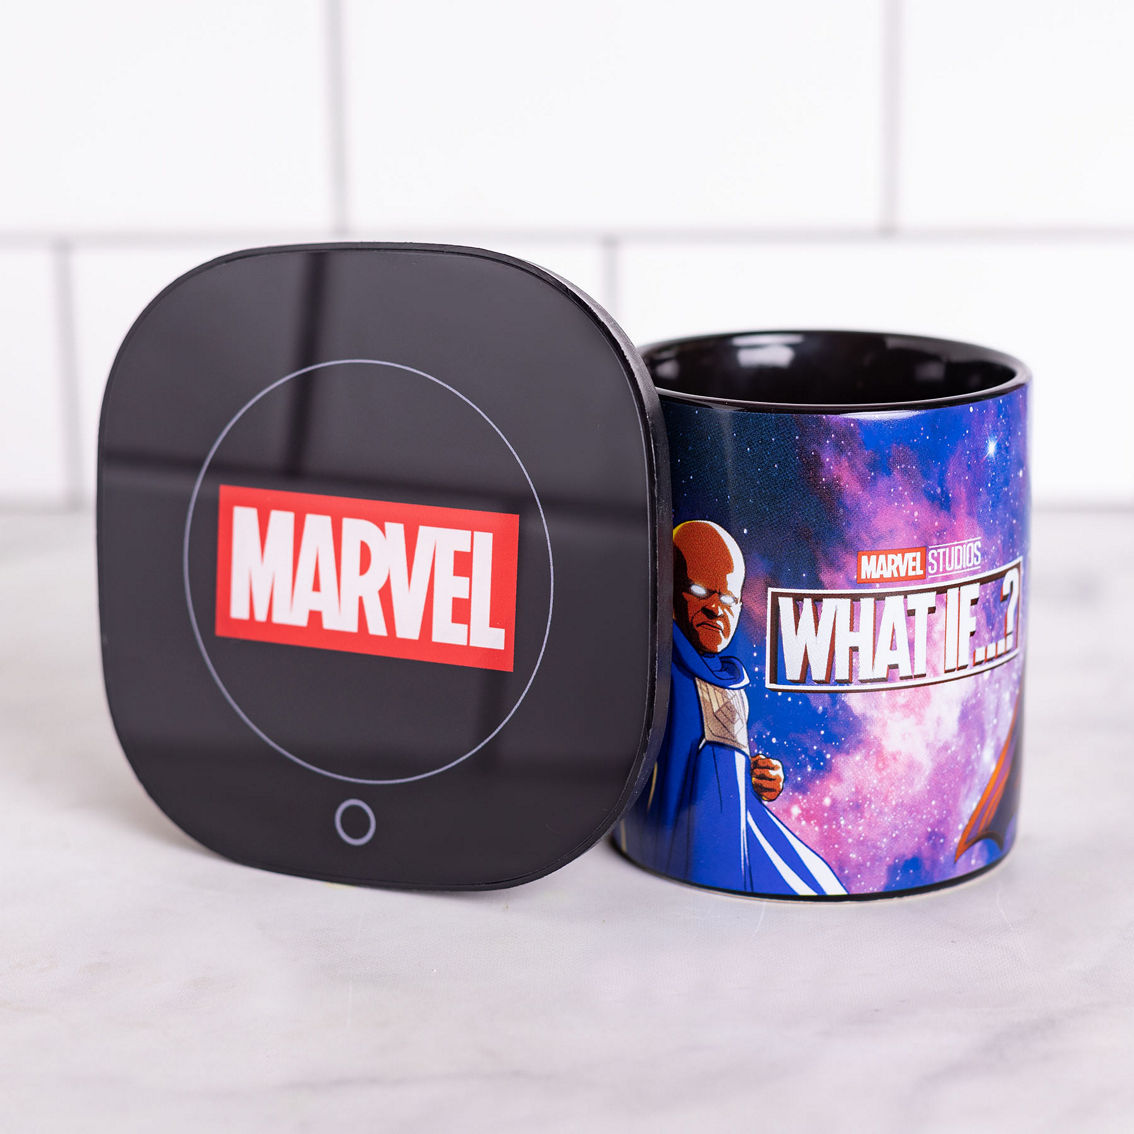 Uncanny Brands Marvel What If Mug Warmer with Mug - Image 7 of 10